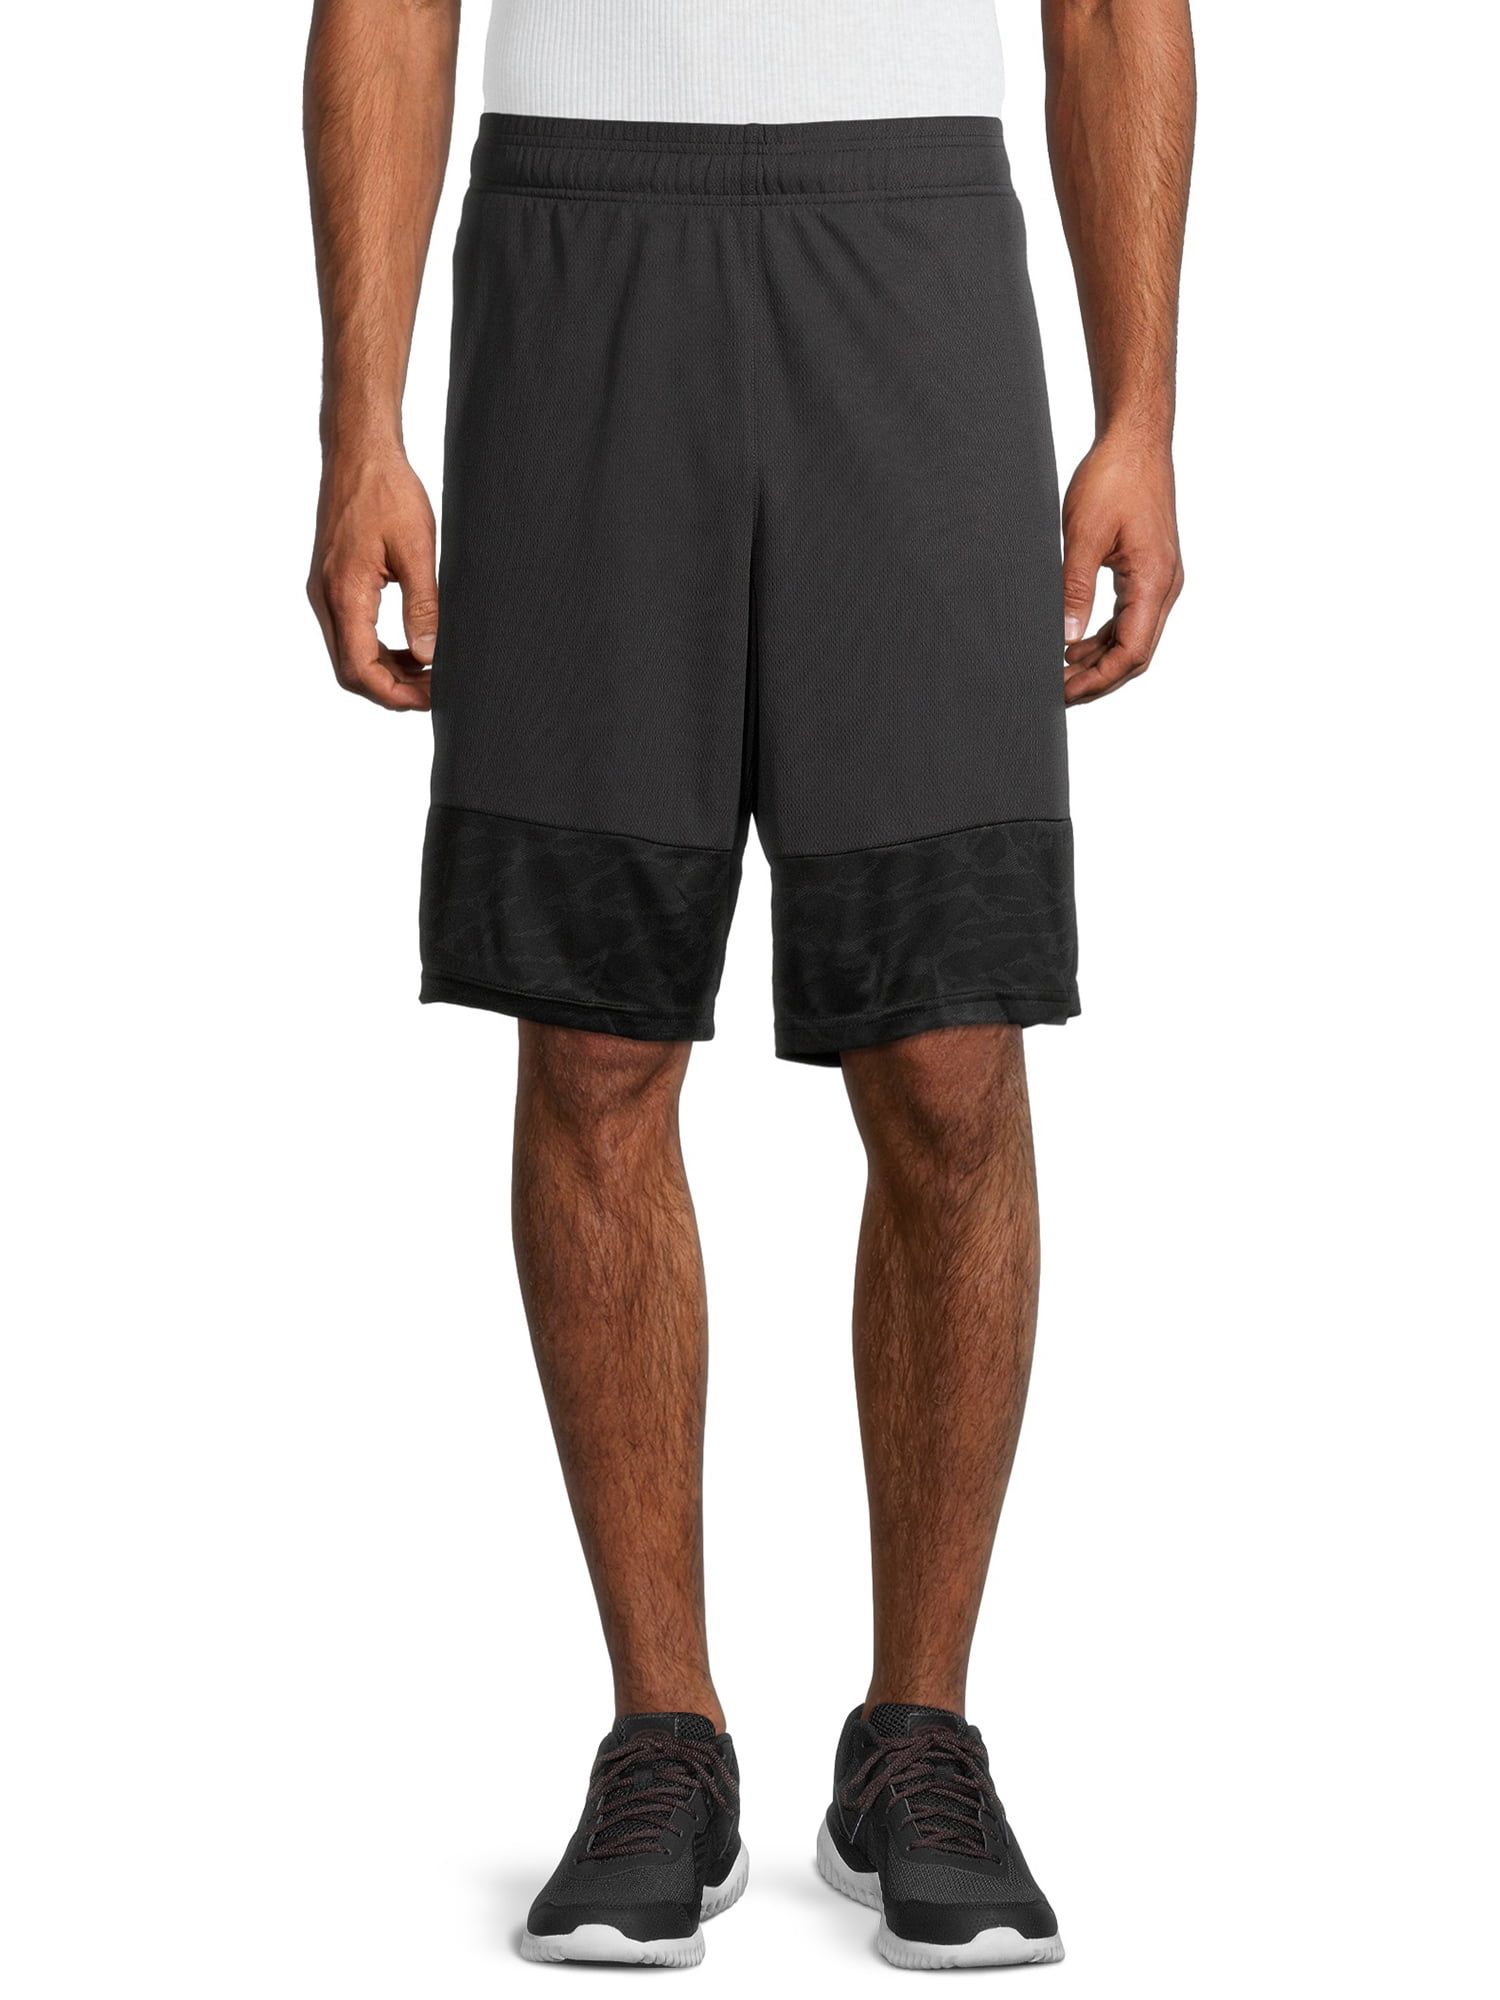 AL1VE Men's Splinter Mesh Basketball Shorts - Walmart.com